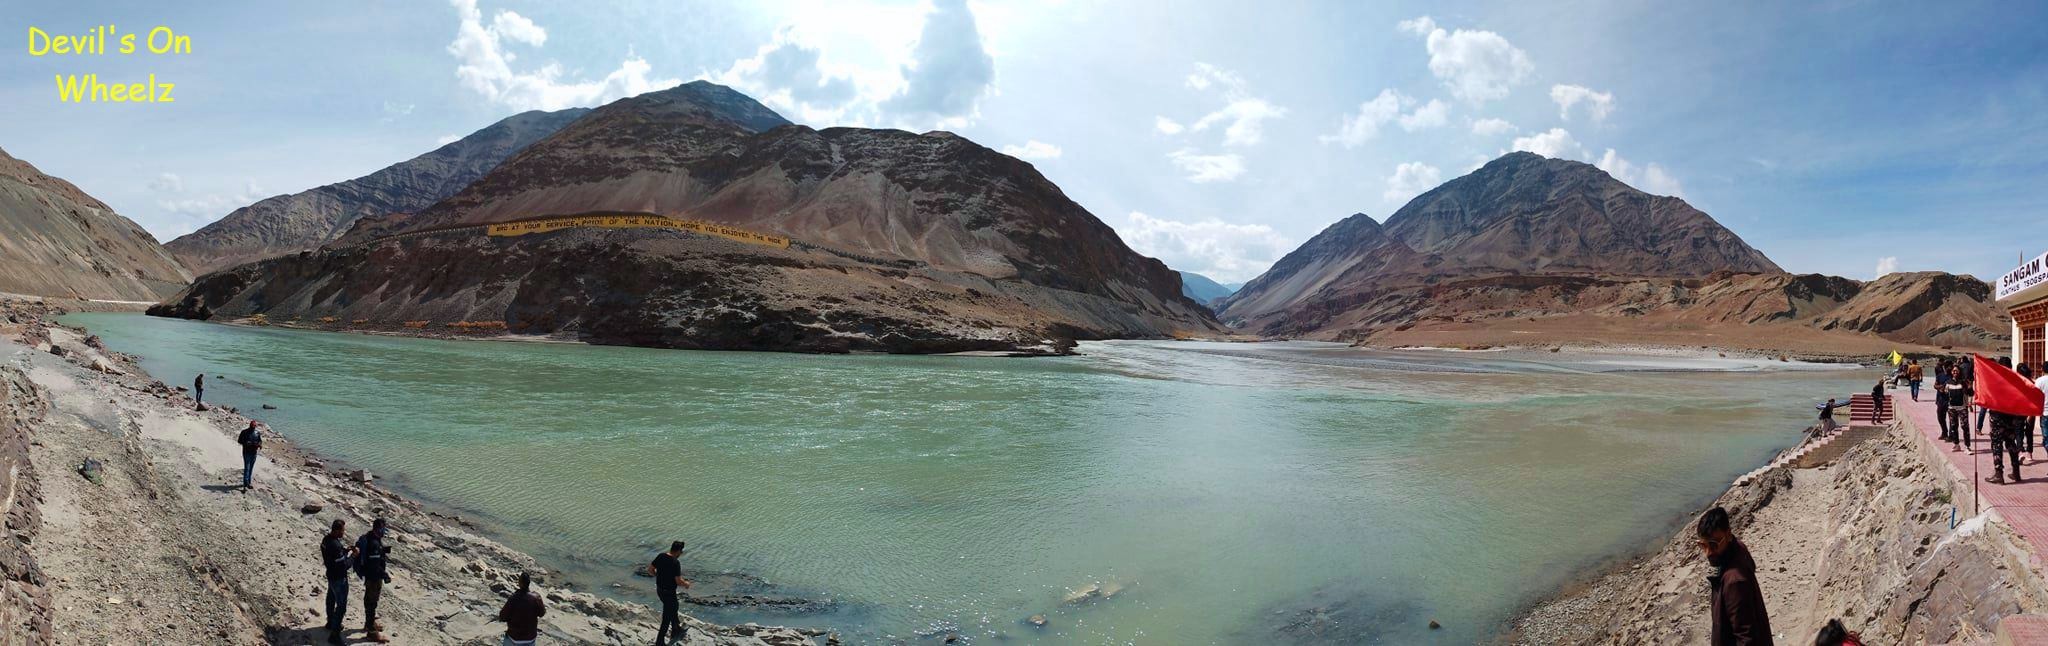 Confluence of Indus and Zanskar Rivers - Sangam Point Ladakh